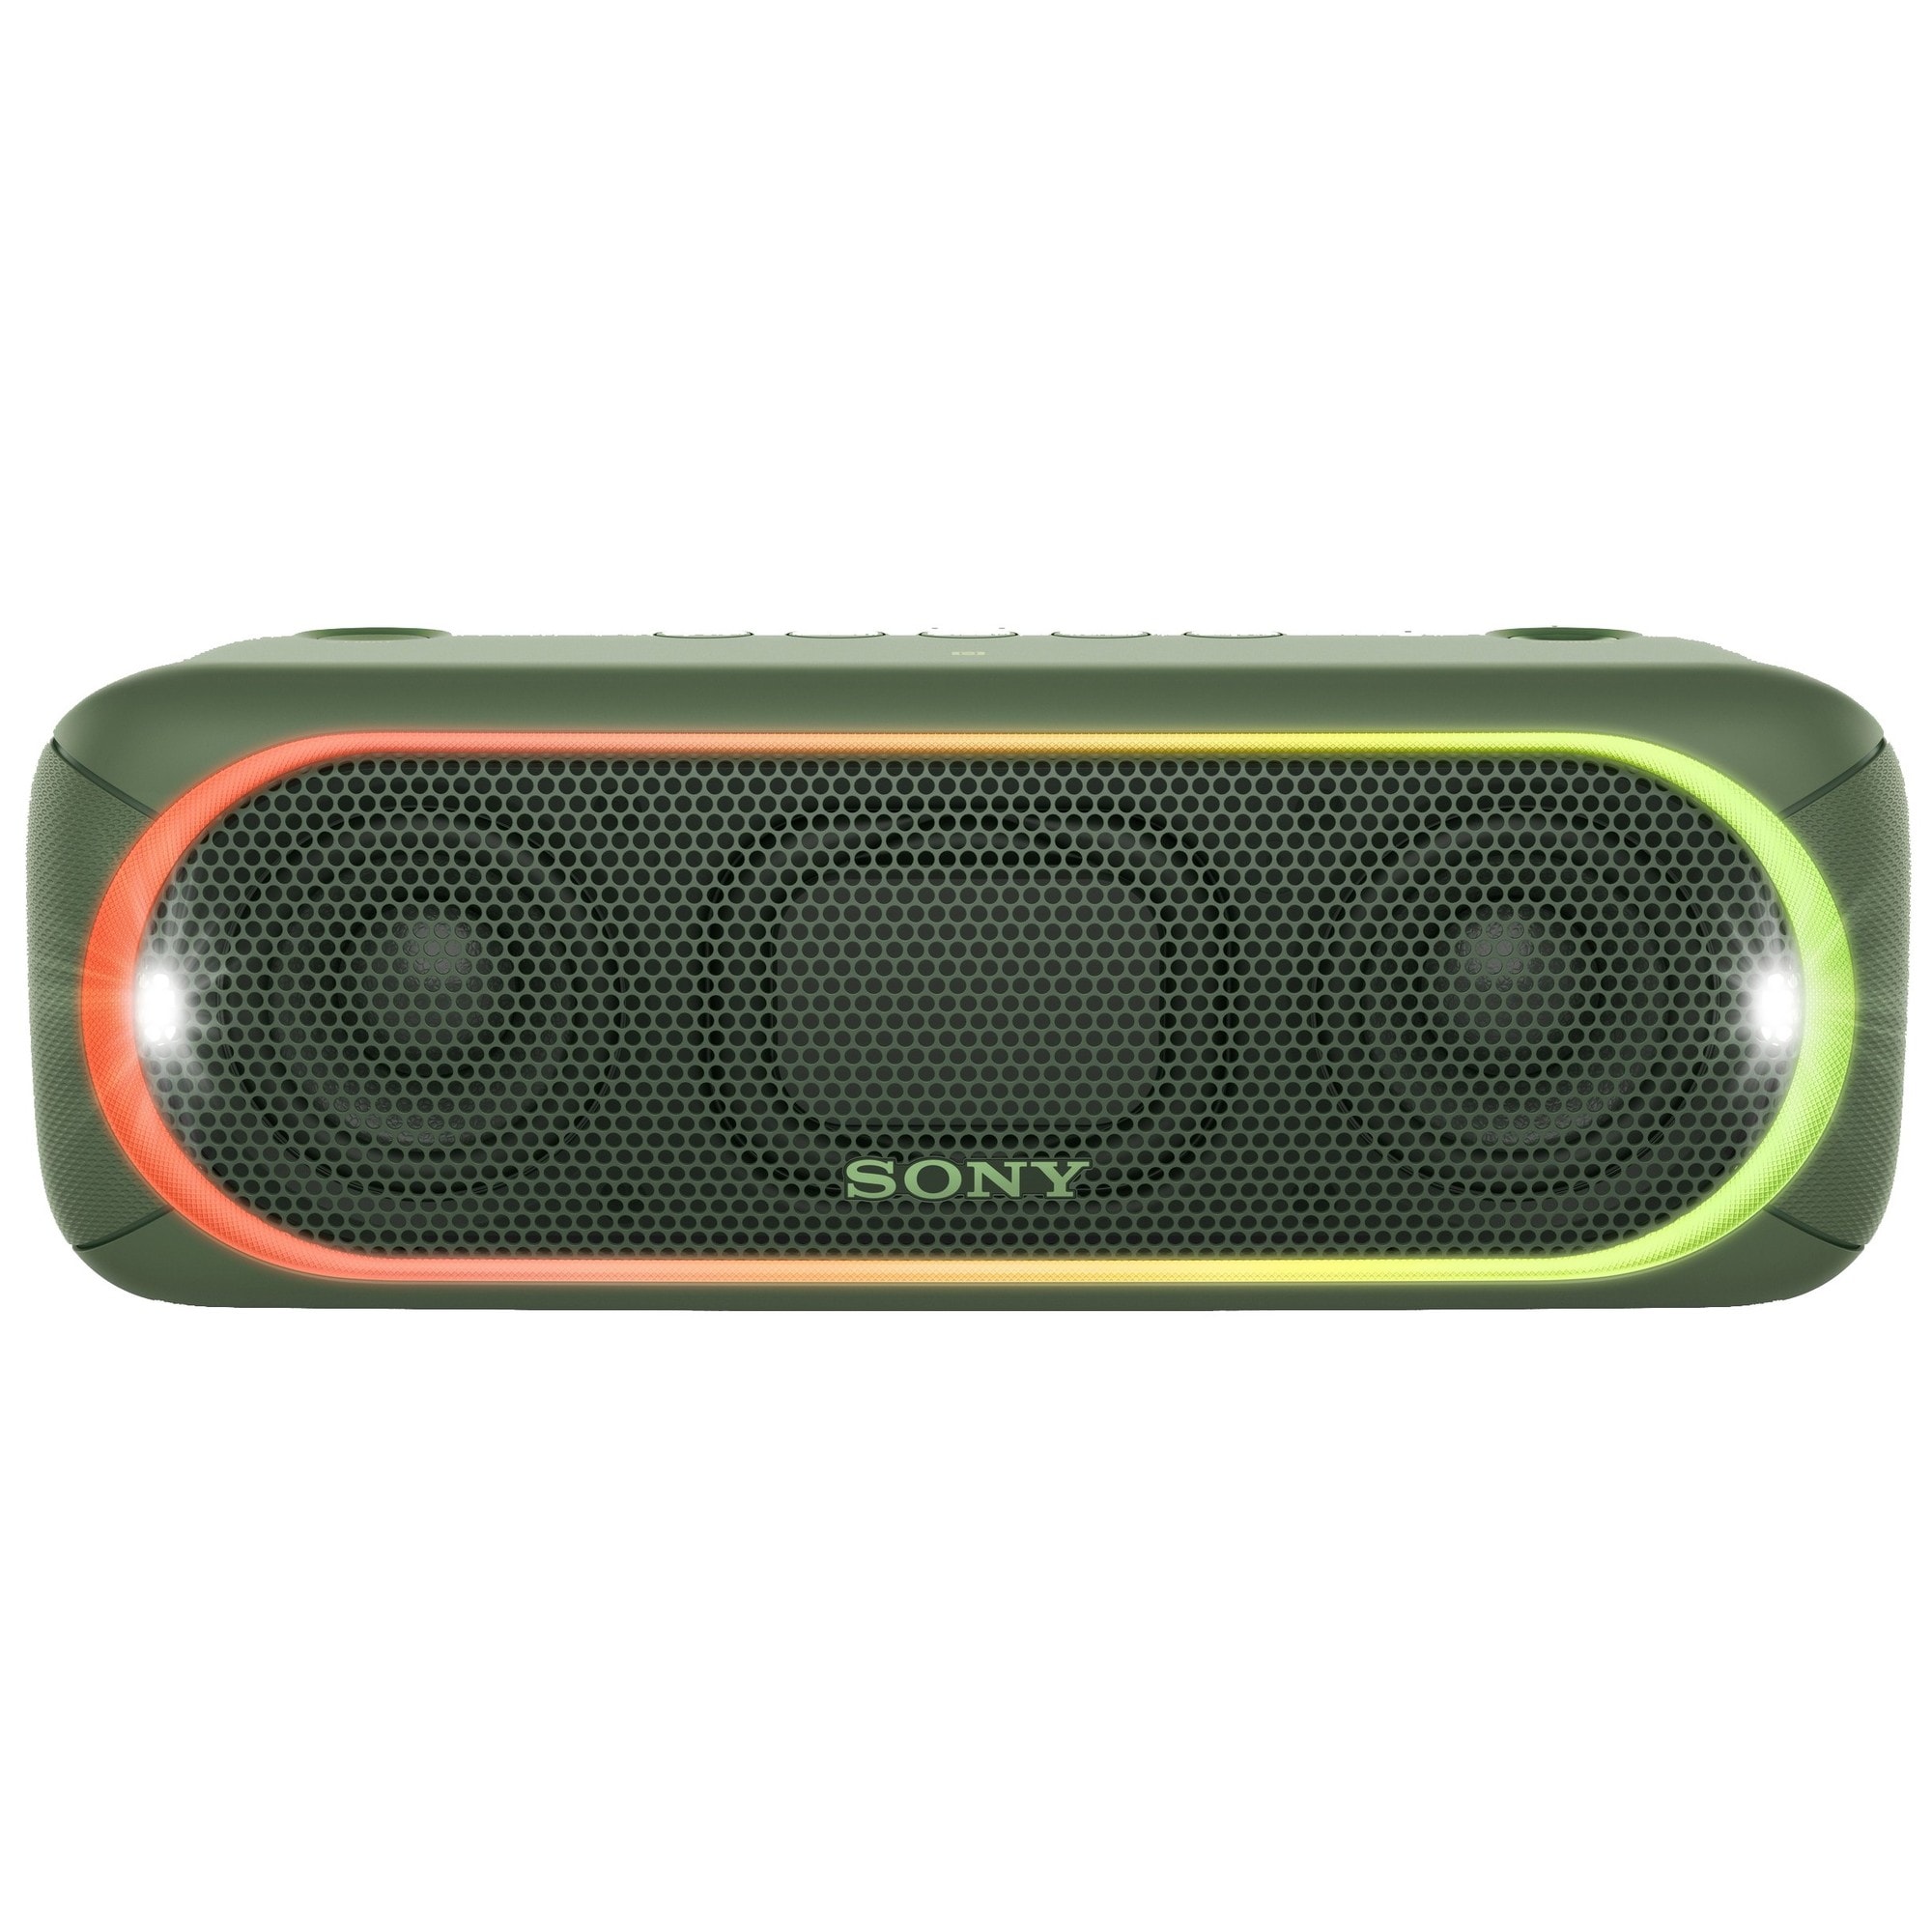 Sony XB30 trådlös högtalare SRS-XB30 (grön) - Elgiganten